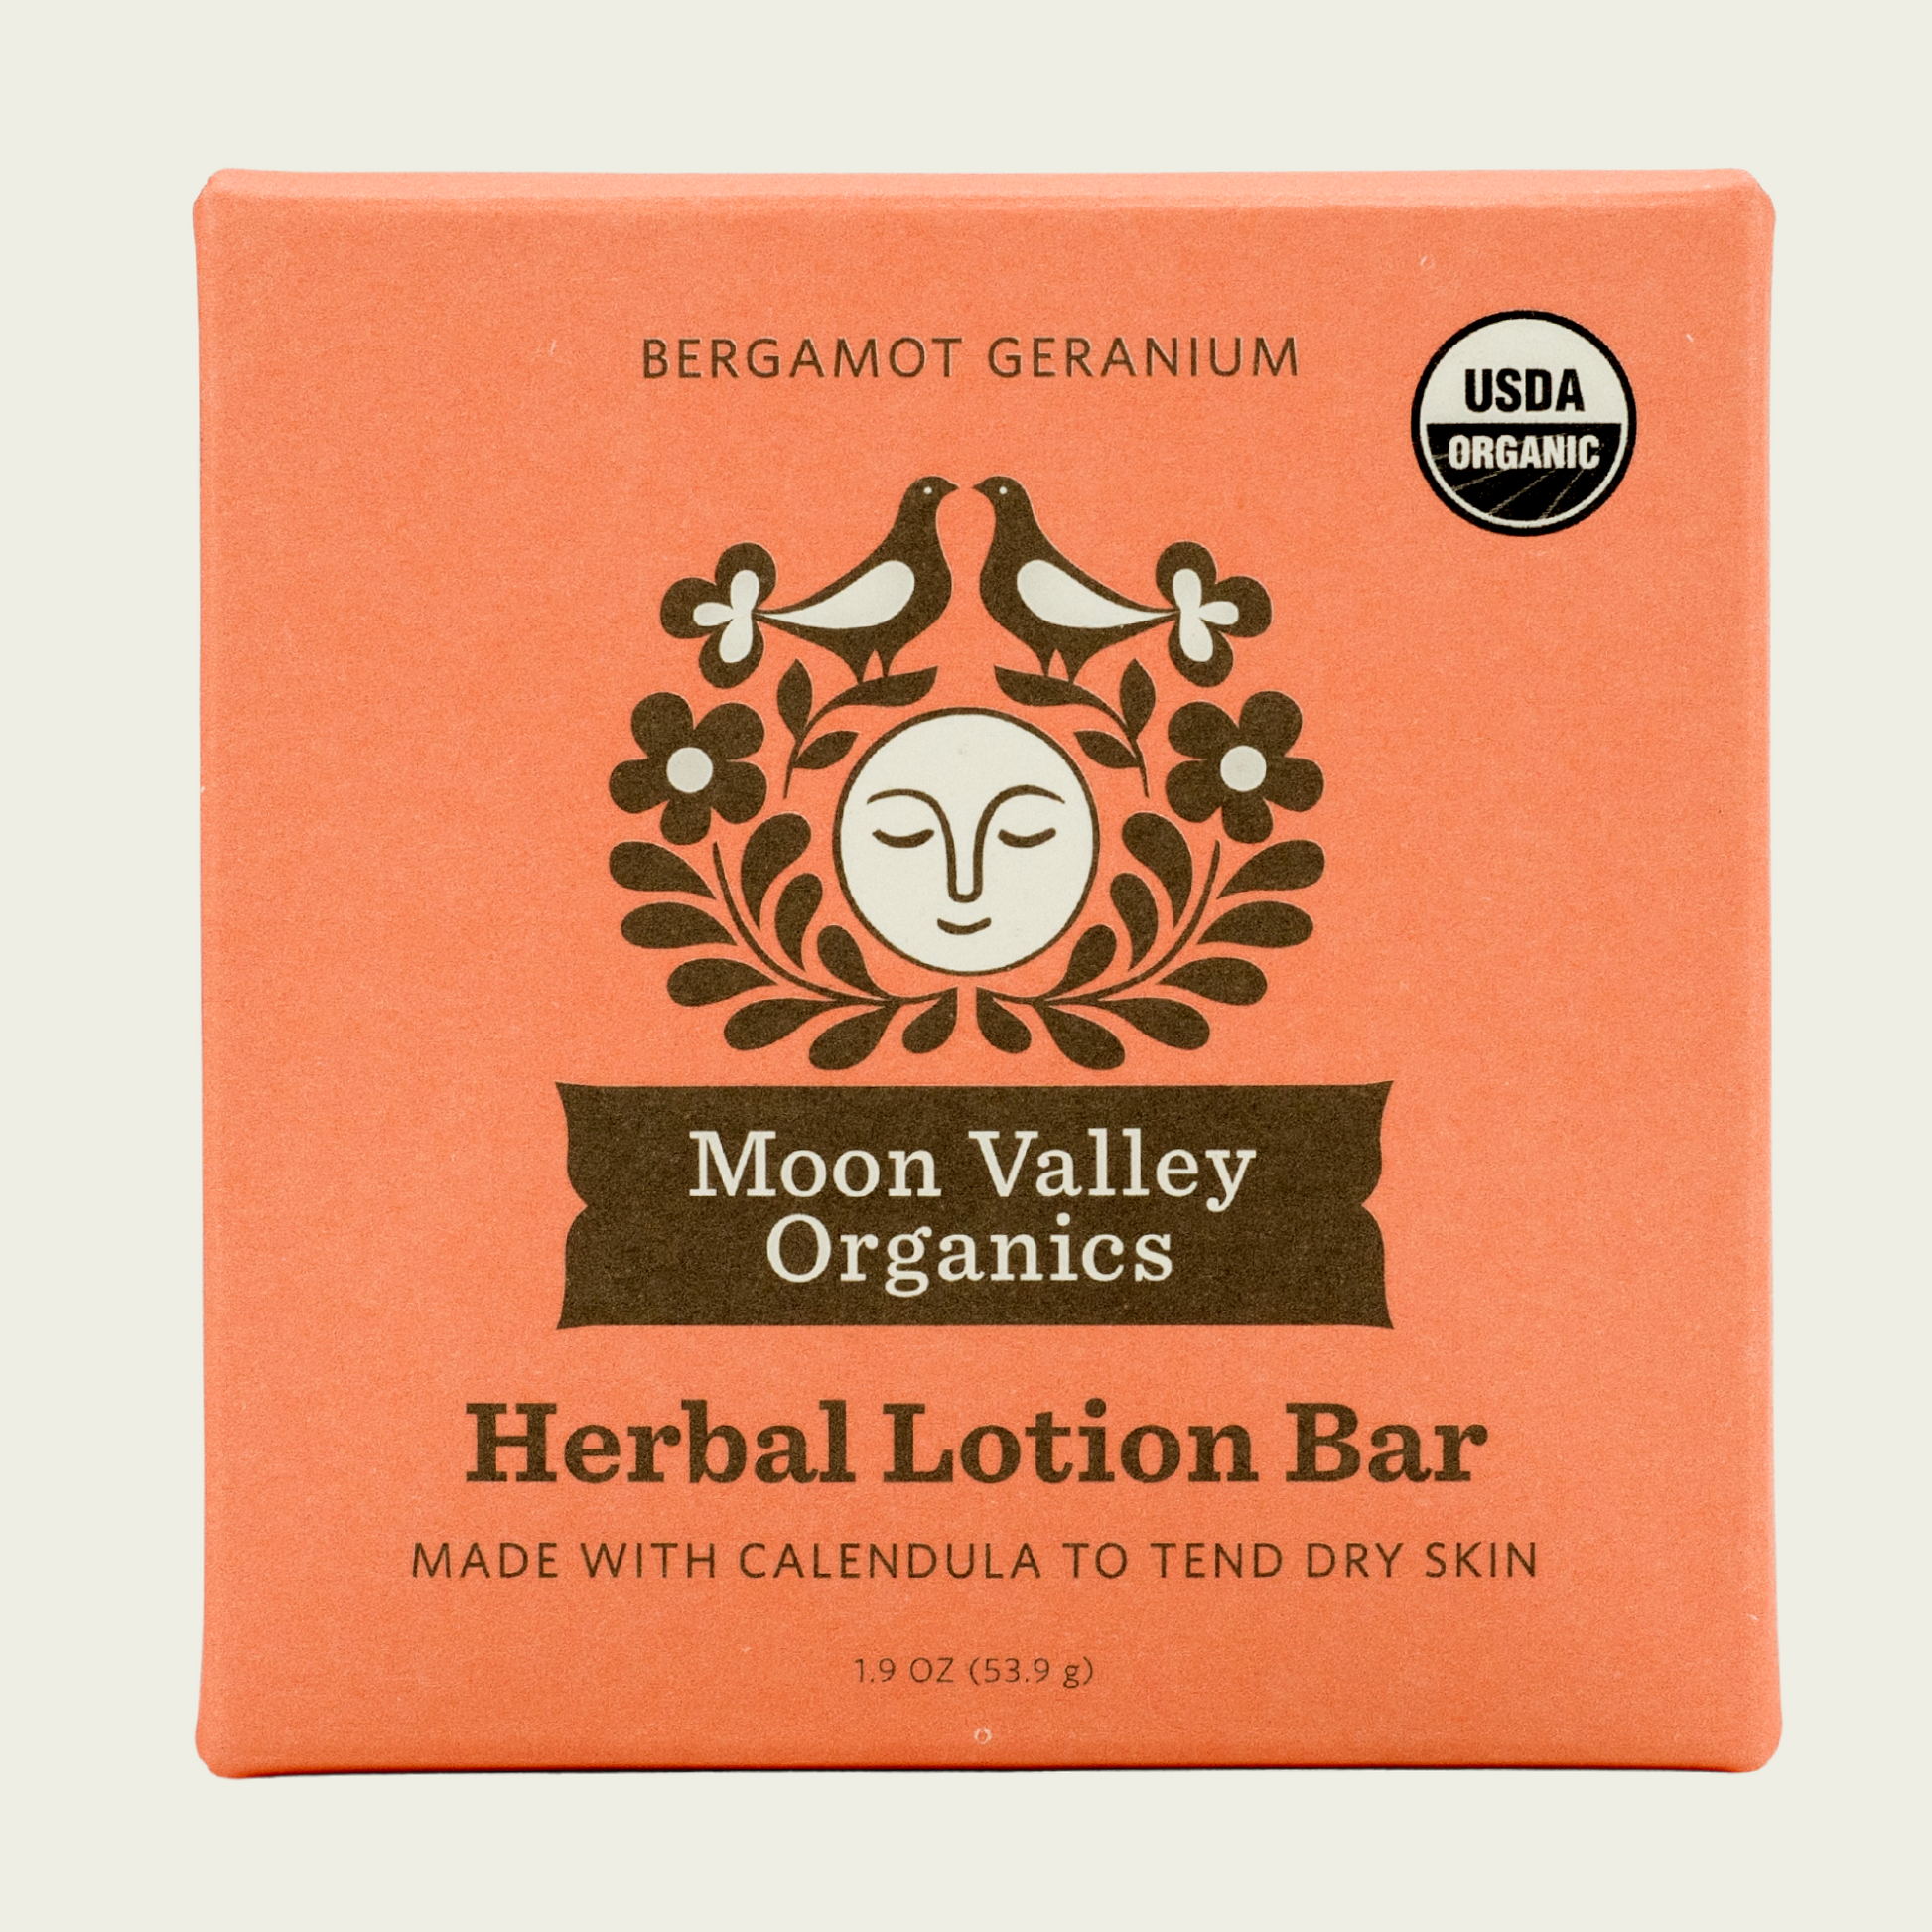 Moon Valley Organics Herbal Lotion Bar Bergamot Geranium Front Box